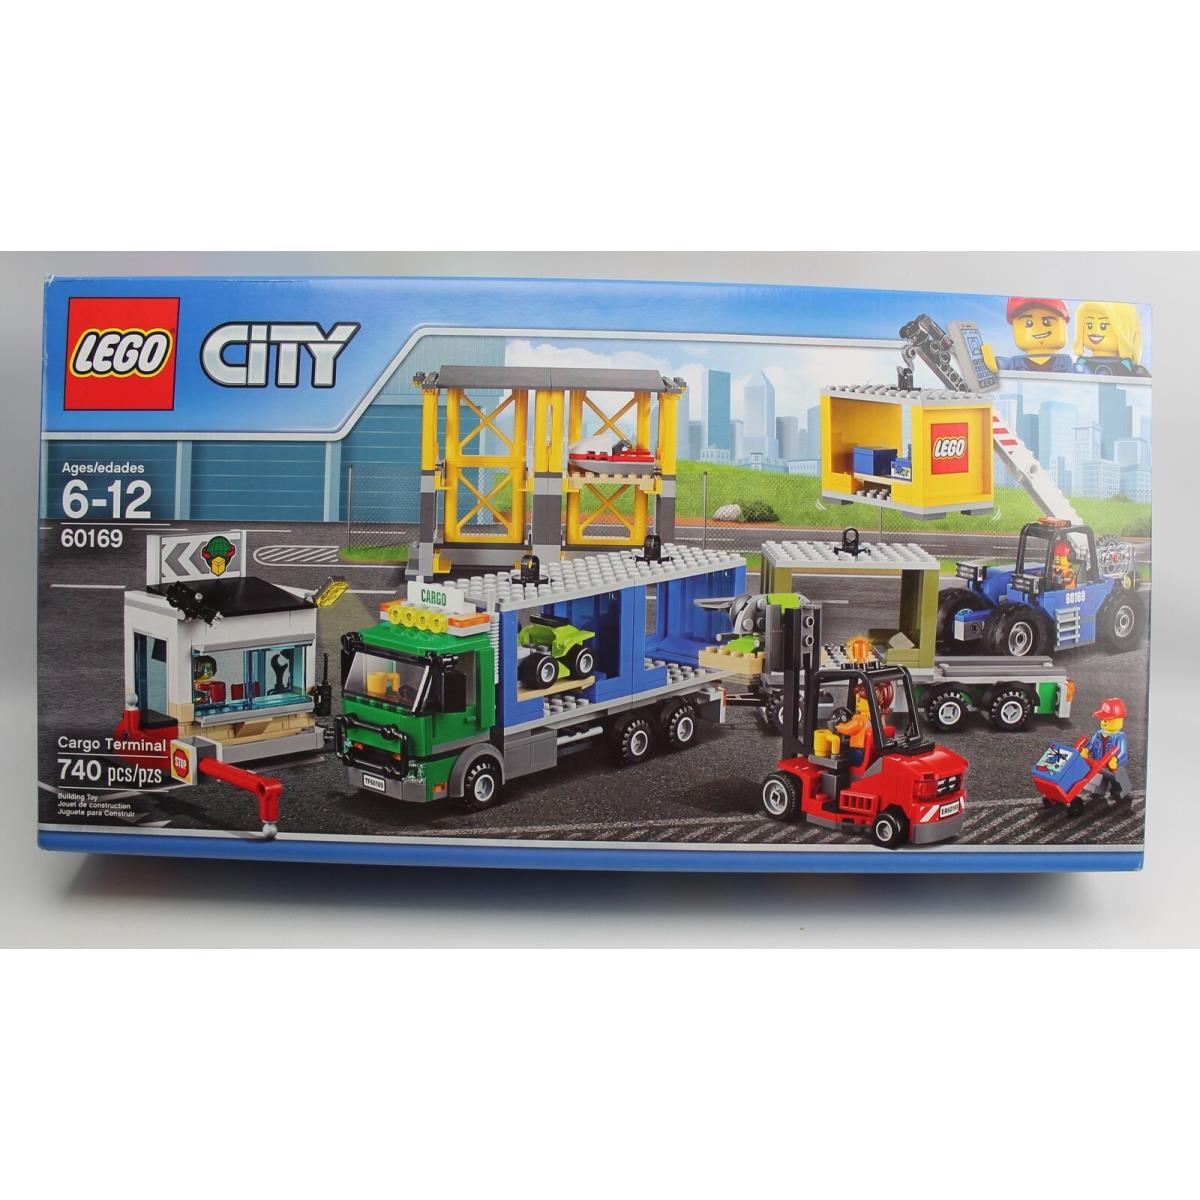 Lego City Cargo Terminal Set 60169